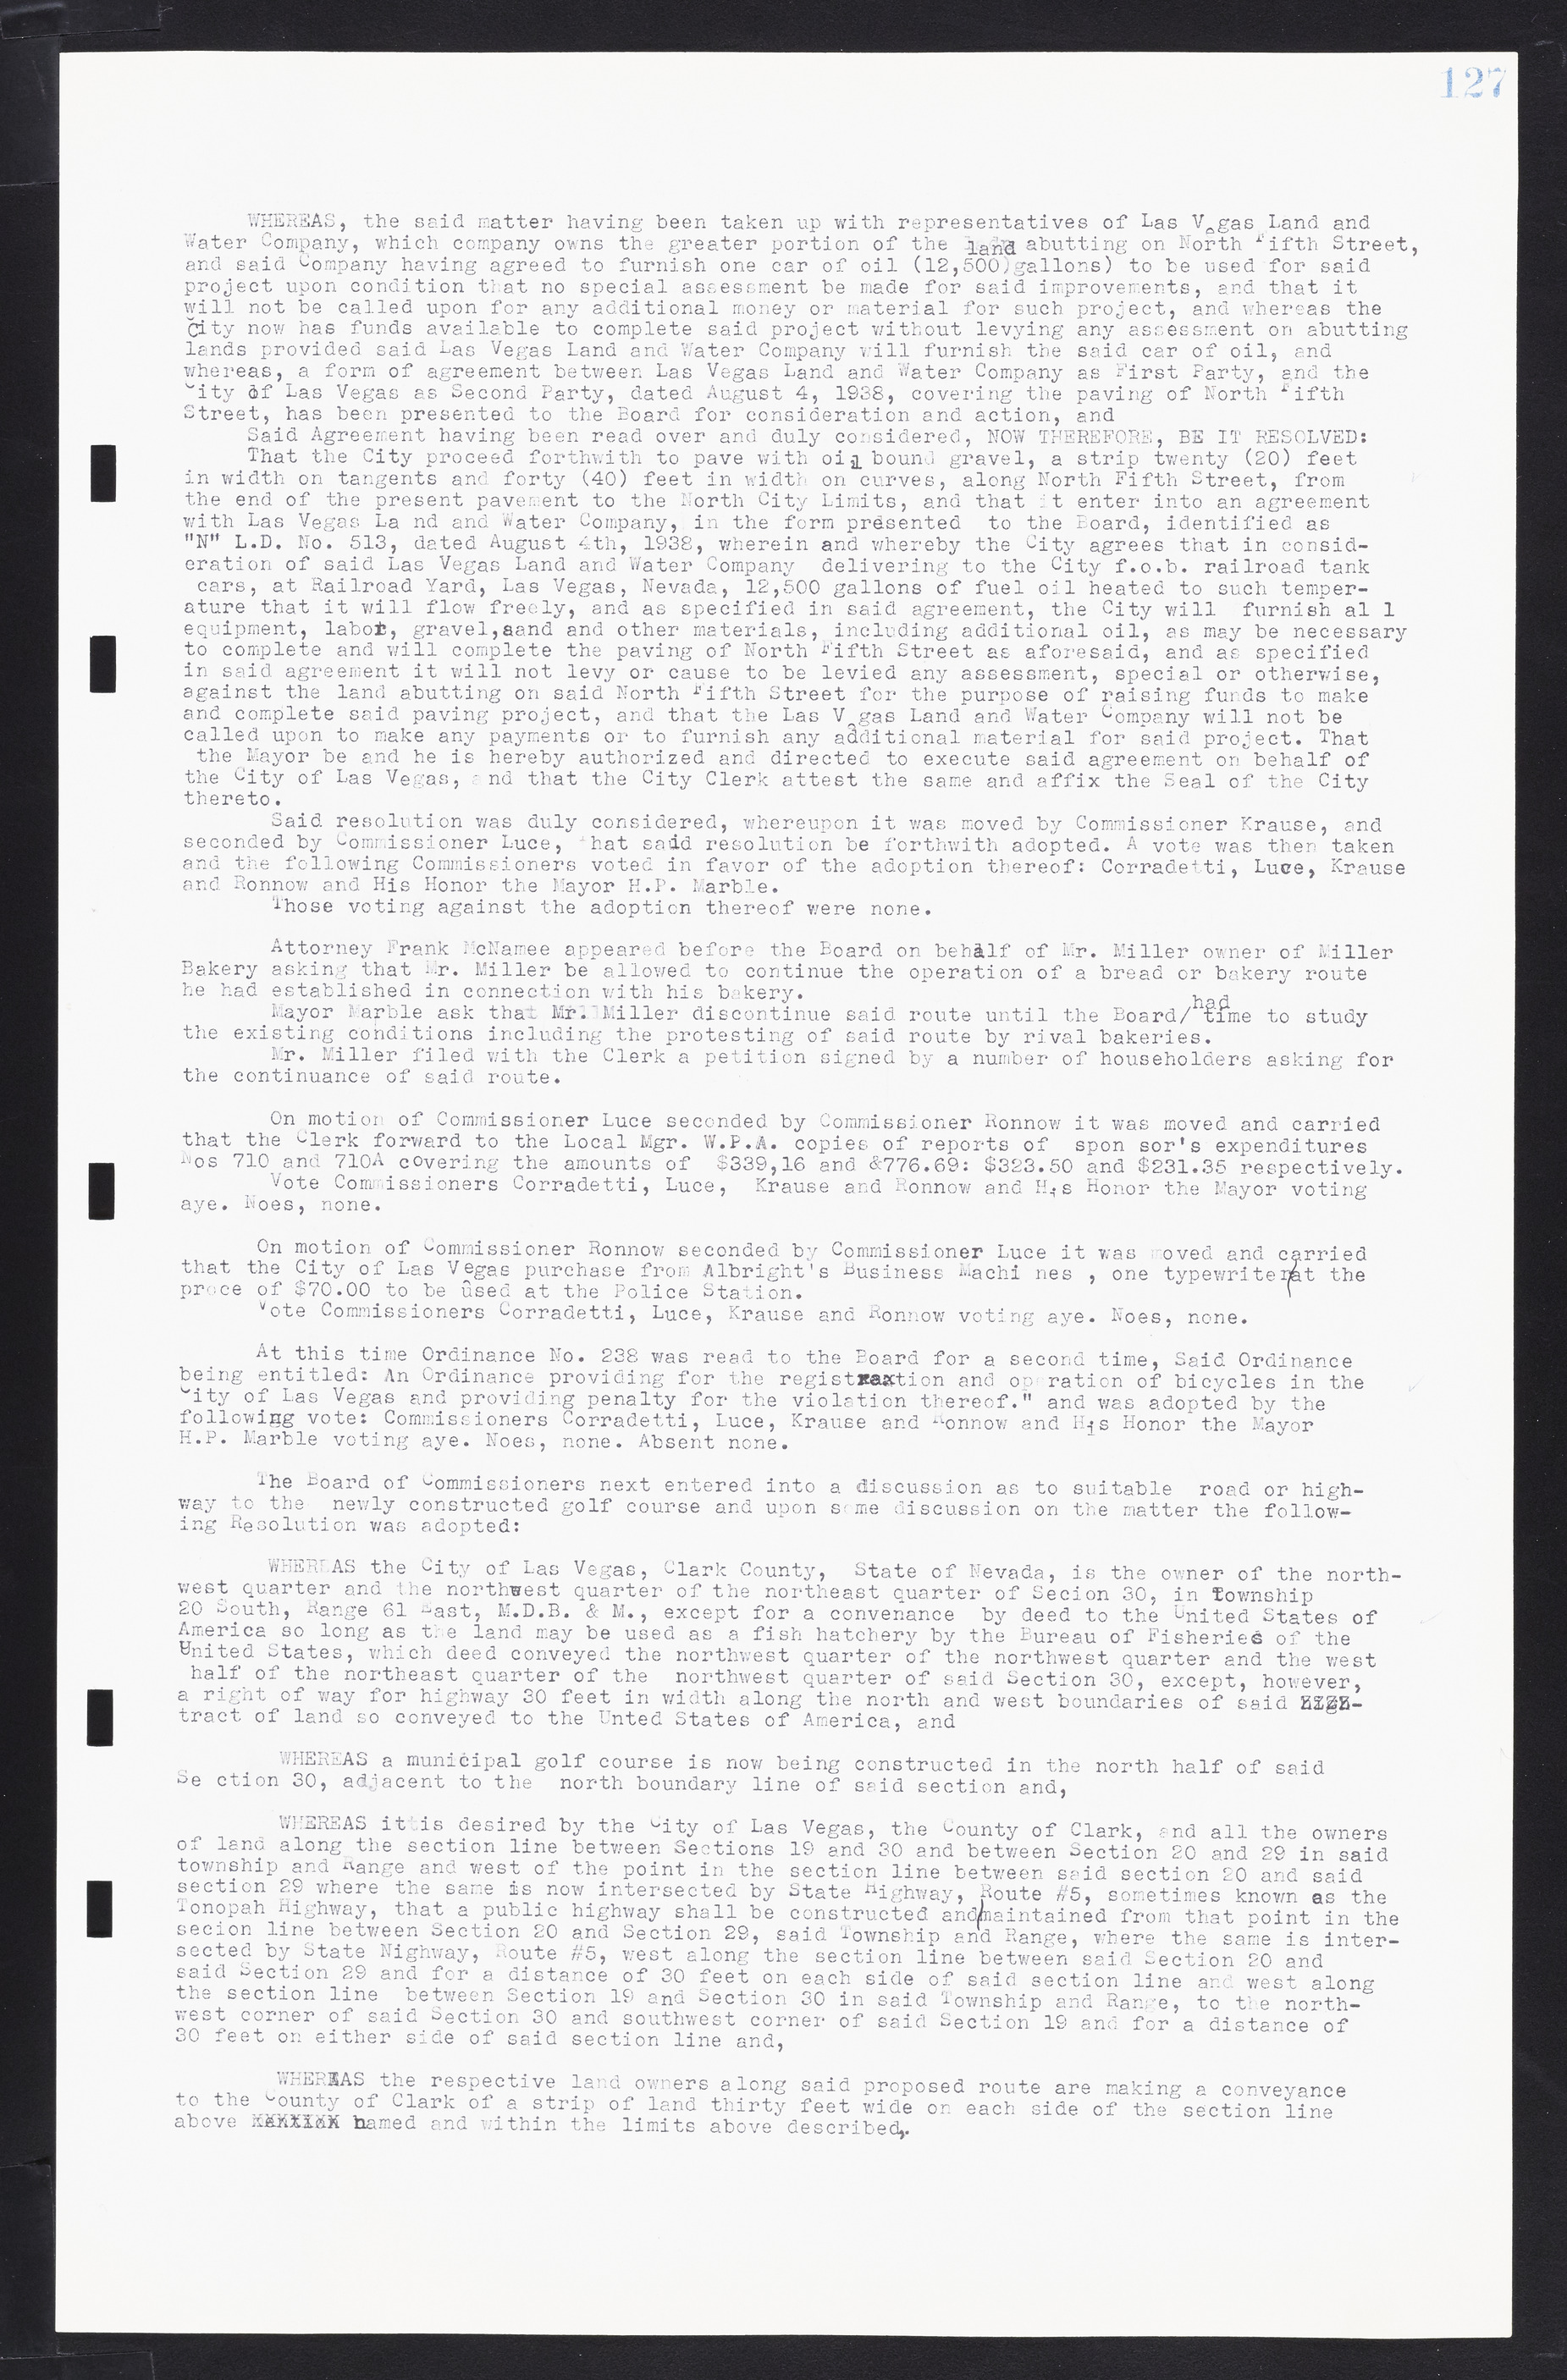 Las Vegas City Commission Minutes, February 17, 1937 to August 4, 1942, lvc000004-140